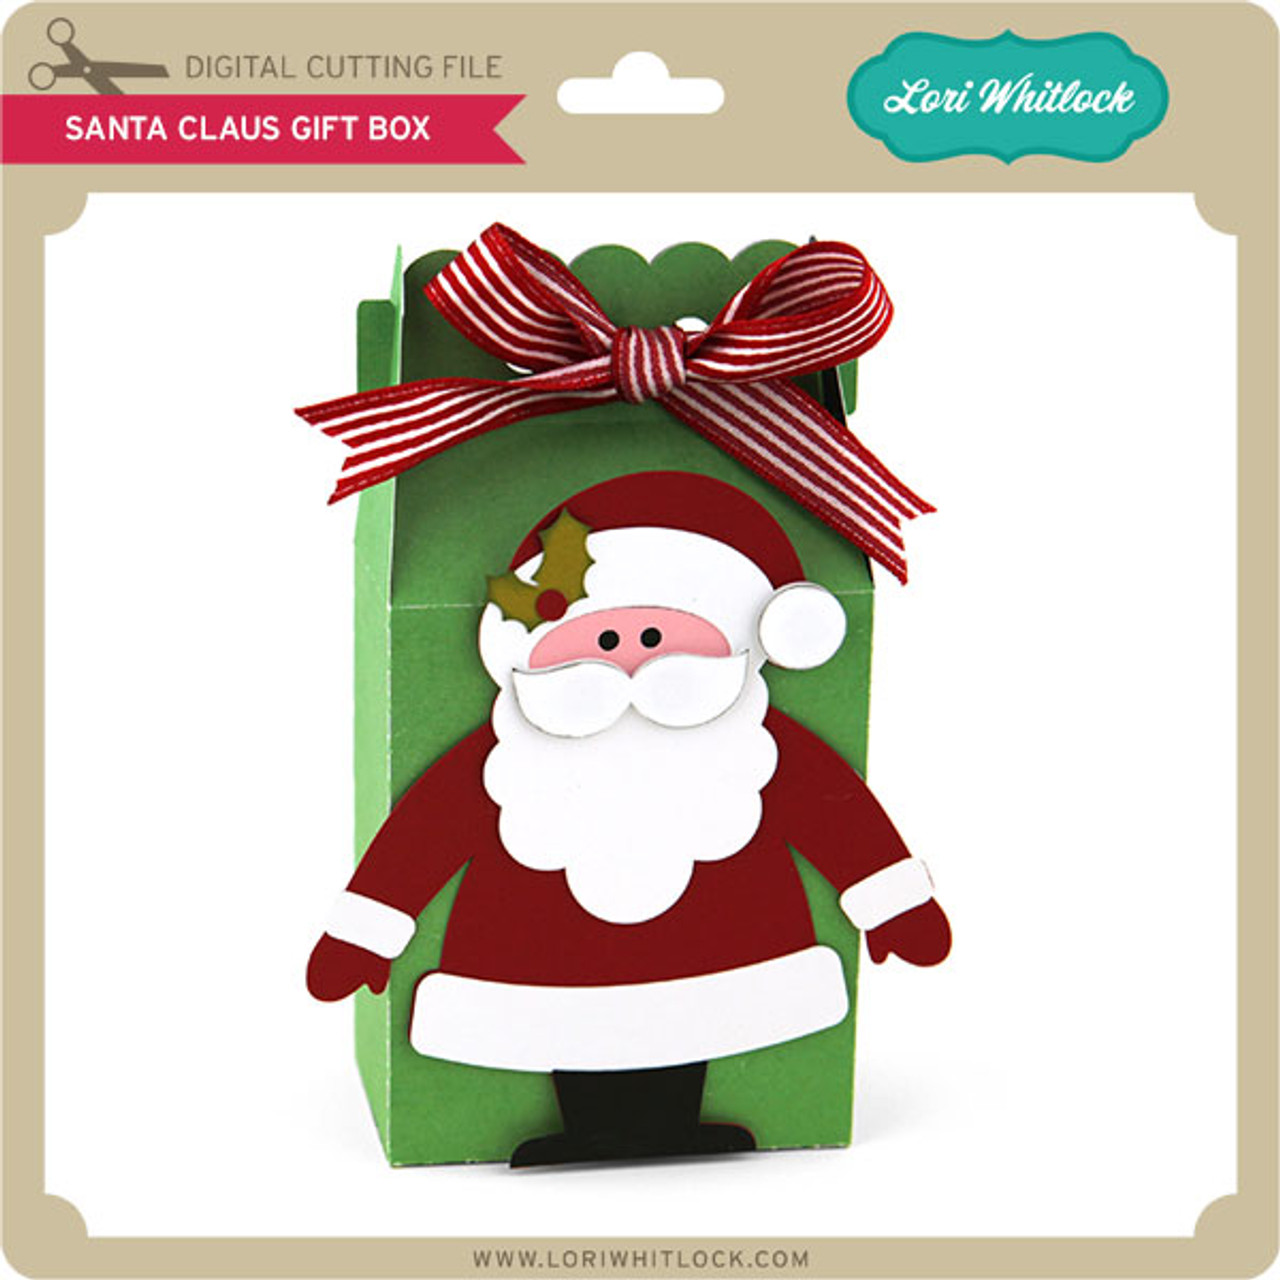 Santa Gift Card Holder 2 - Lori Whitlock's SVG Shop